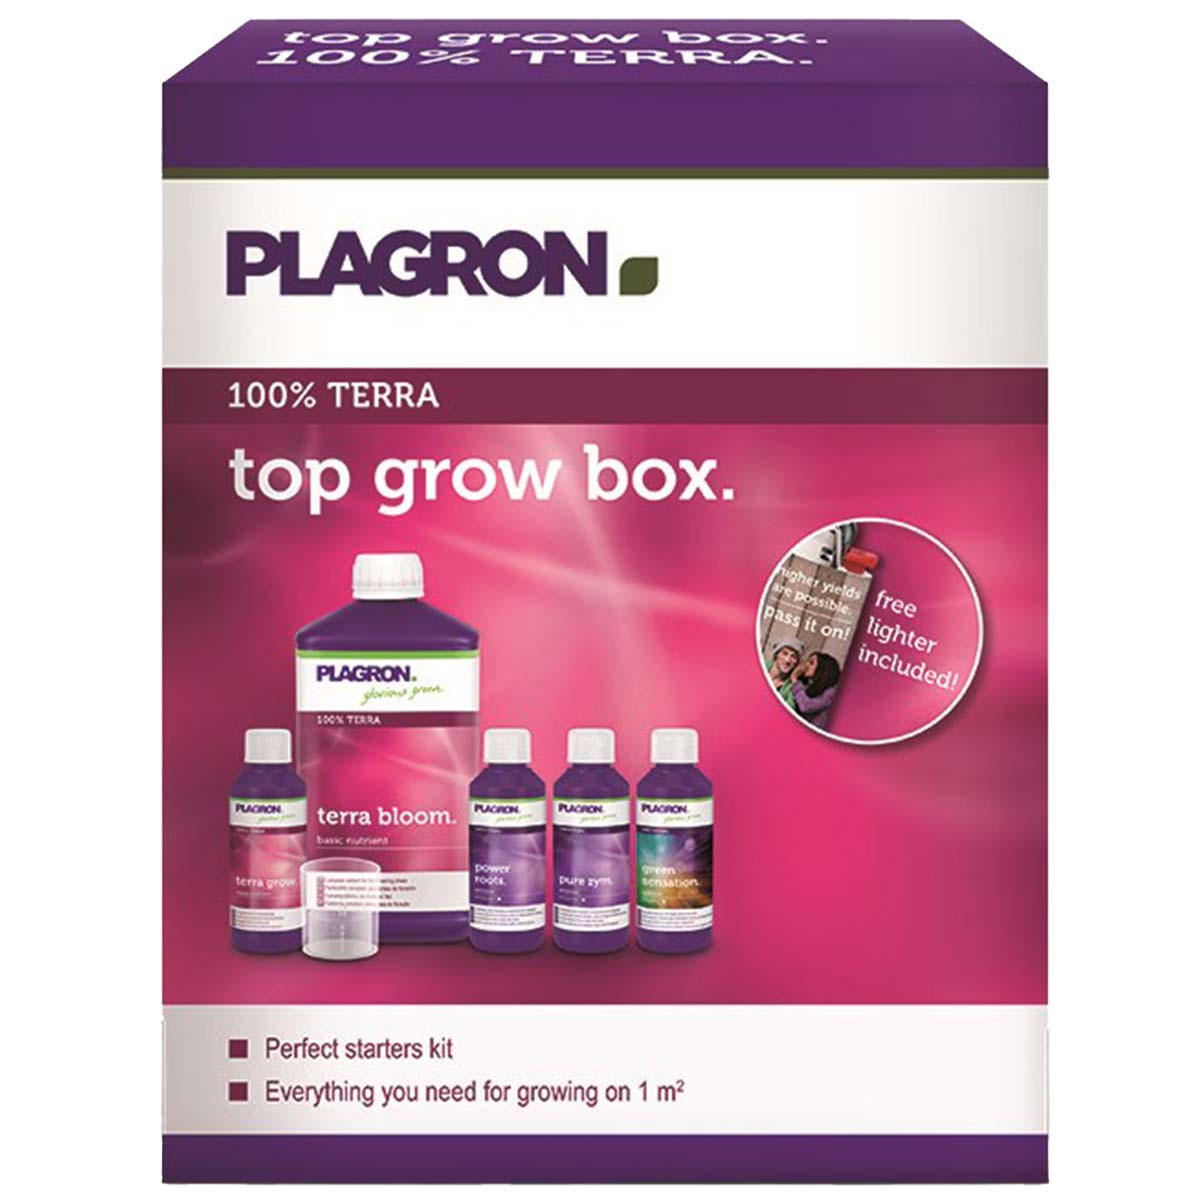 Plagron Top Grow Box